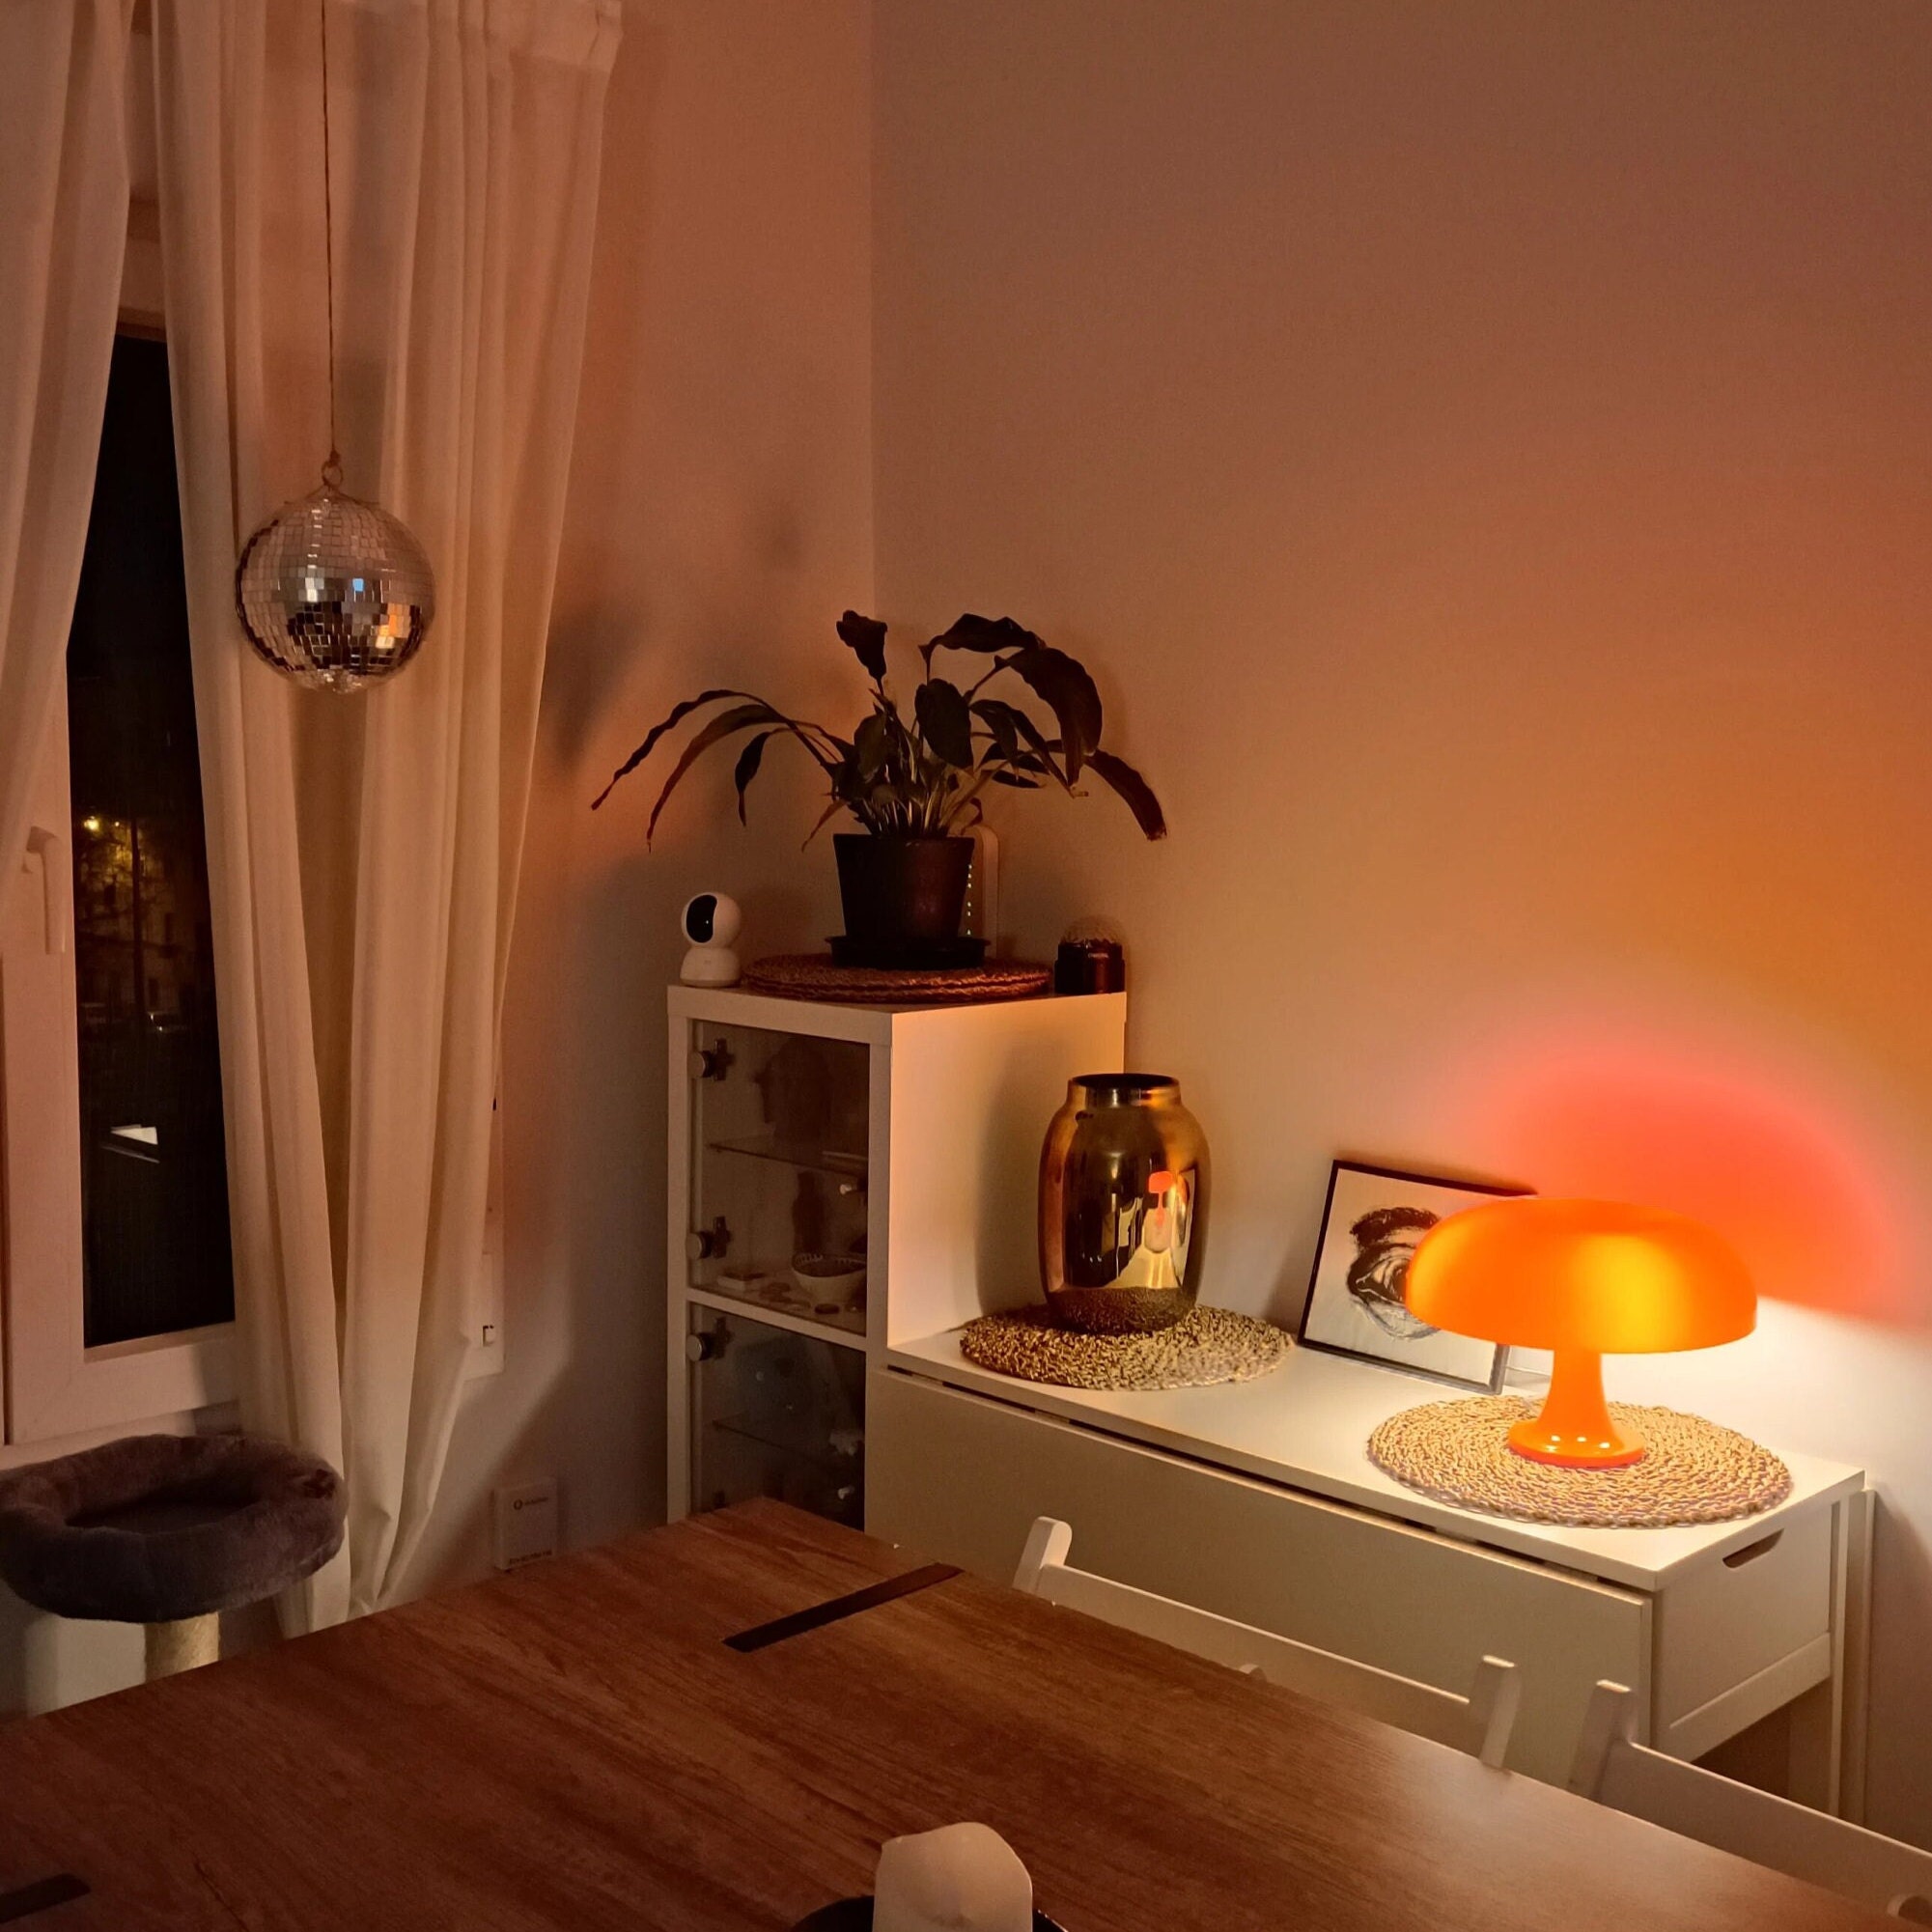 Modern Table Lamp, Bedside Lamp for Aesthetic Home Decor